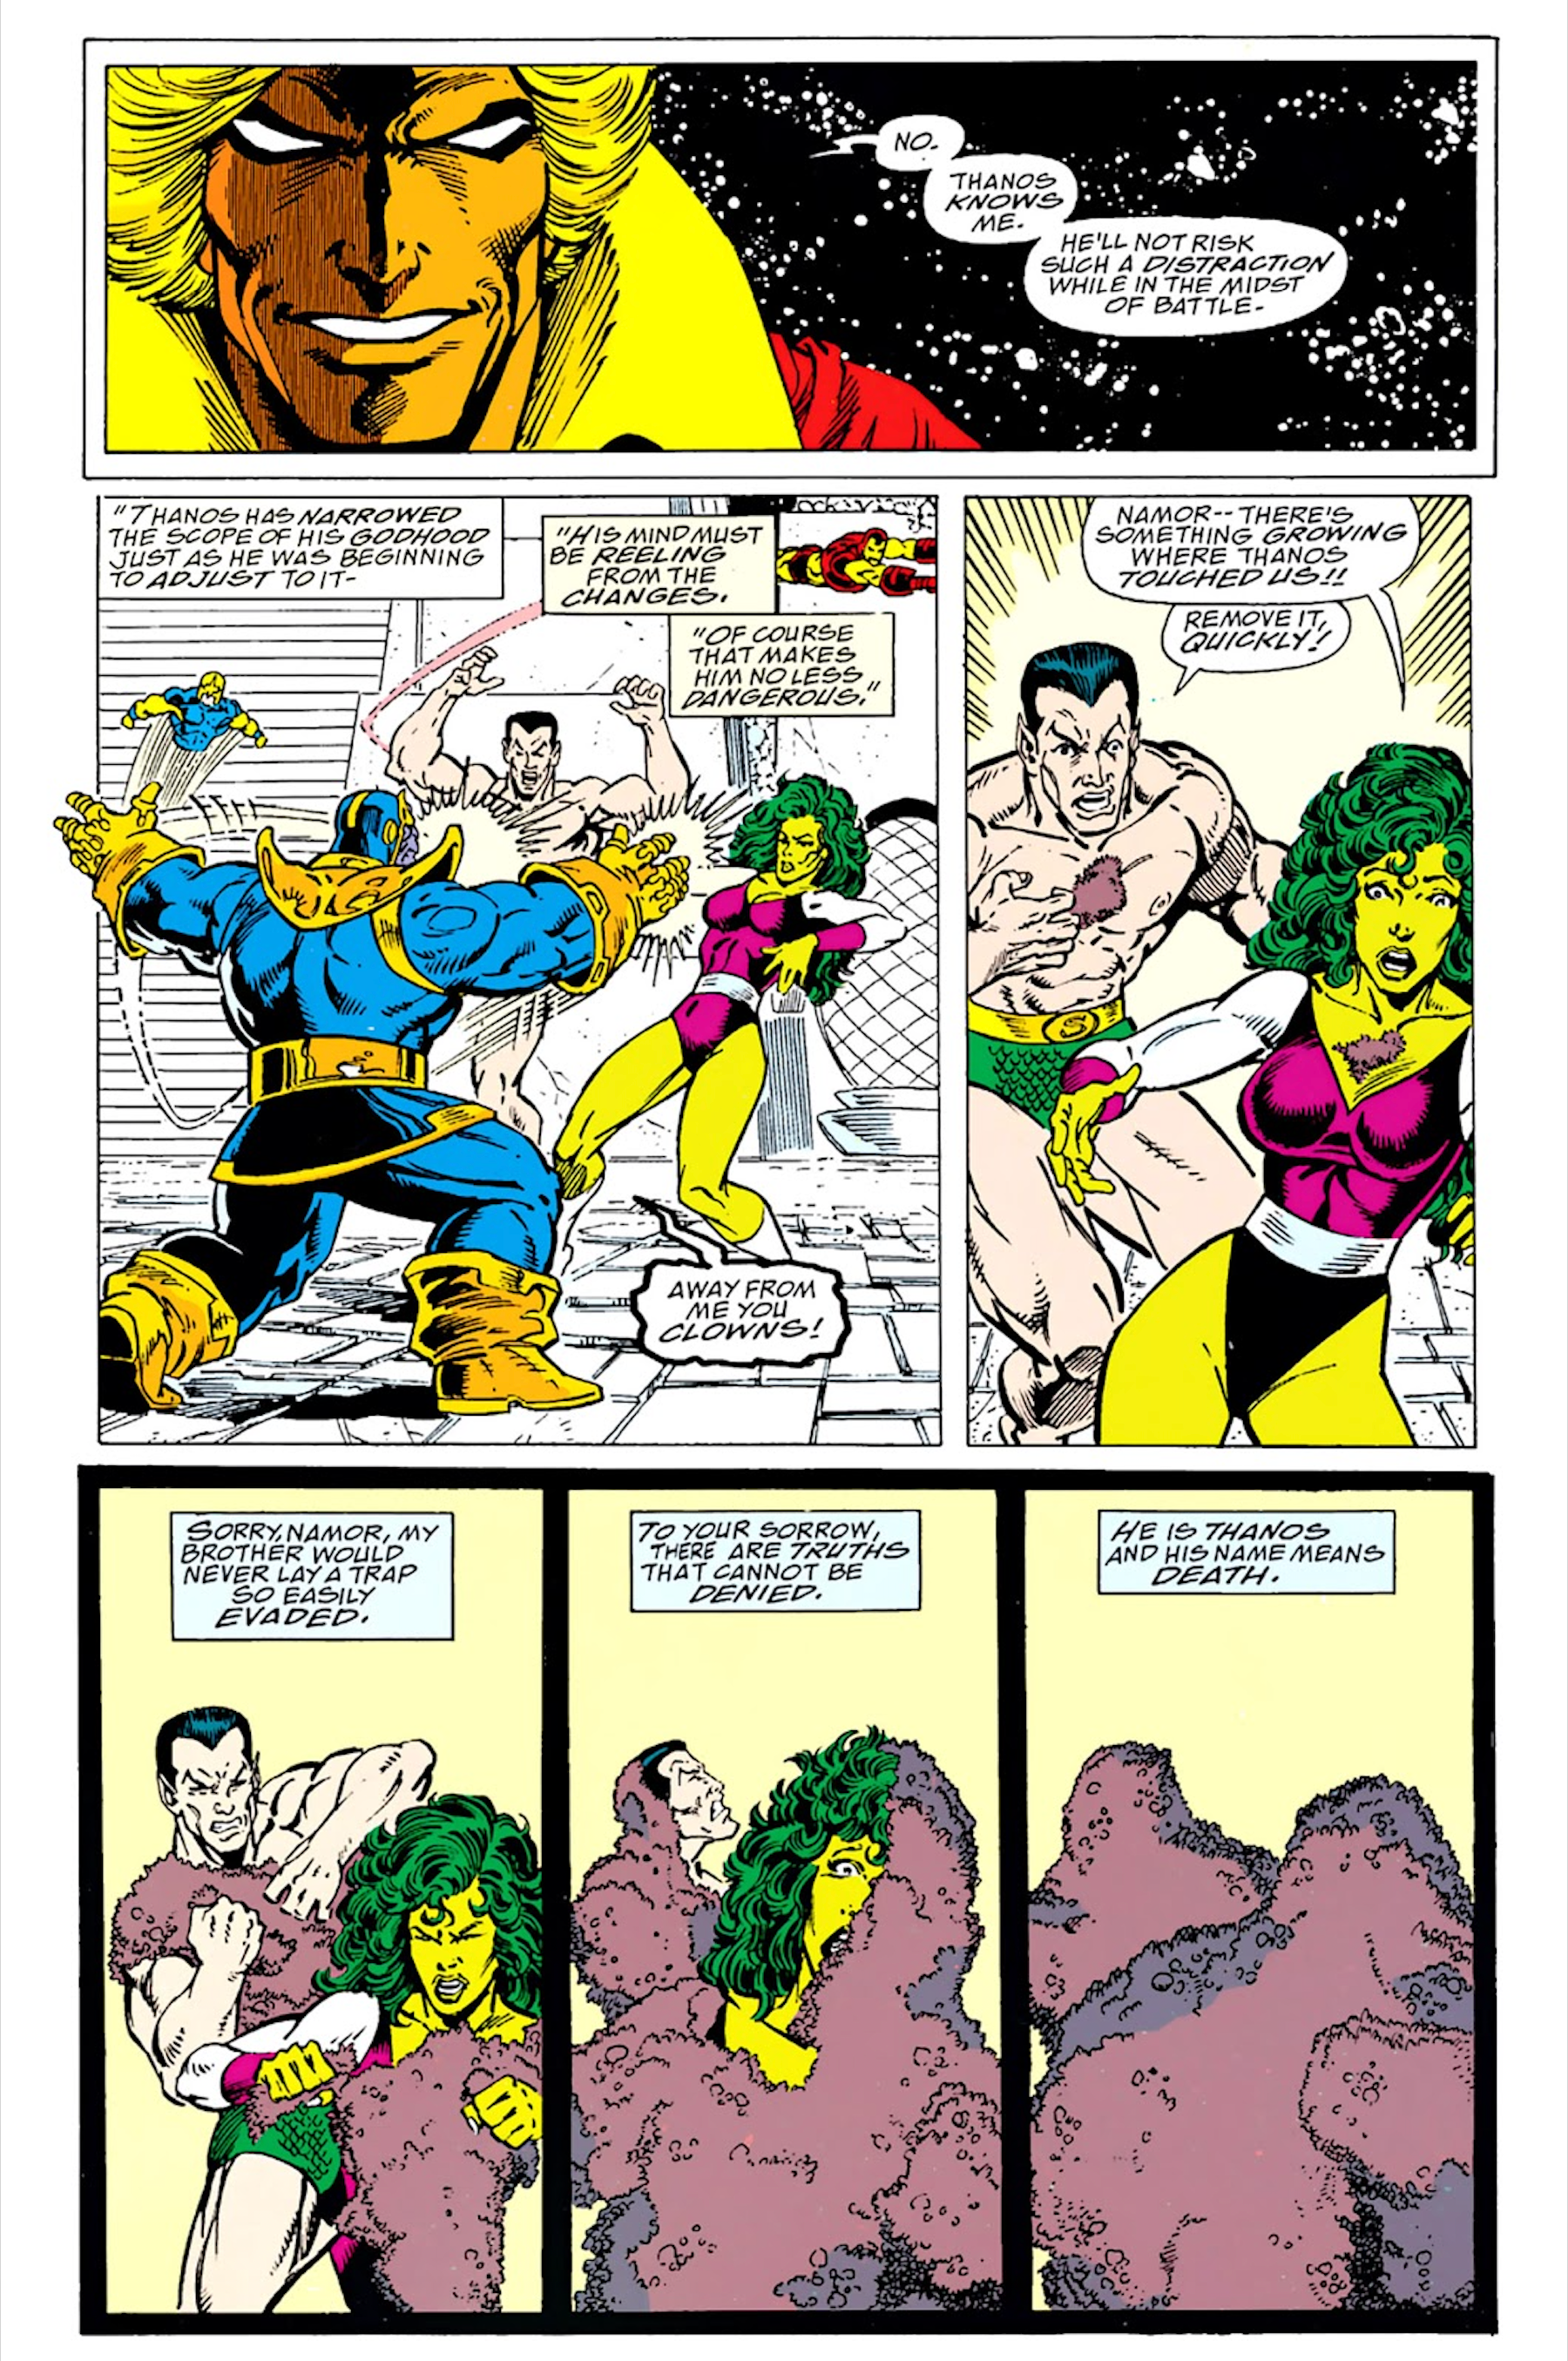 Thanos’ Twisted She-Hulk Kill Is Too Dark for the MCU